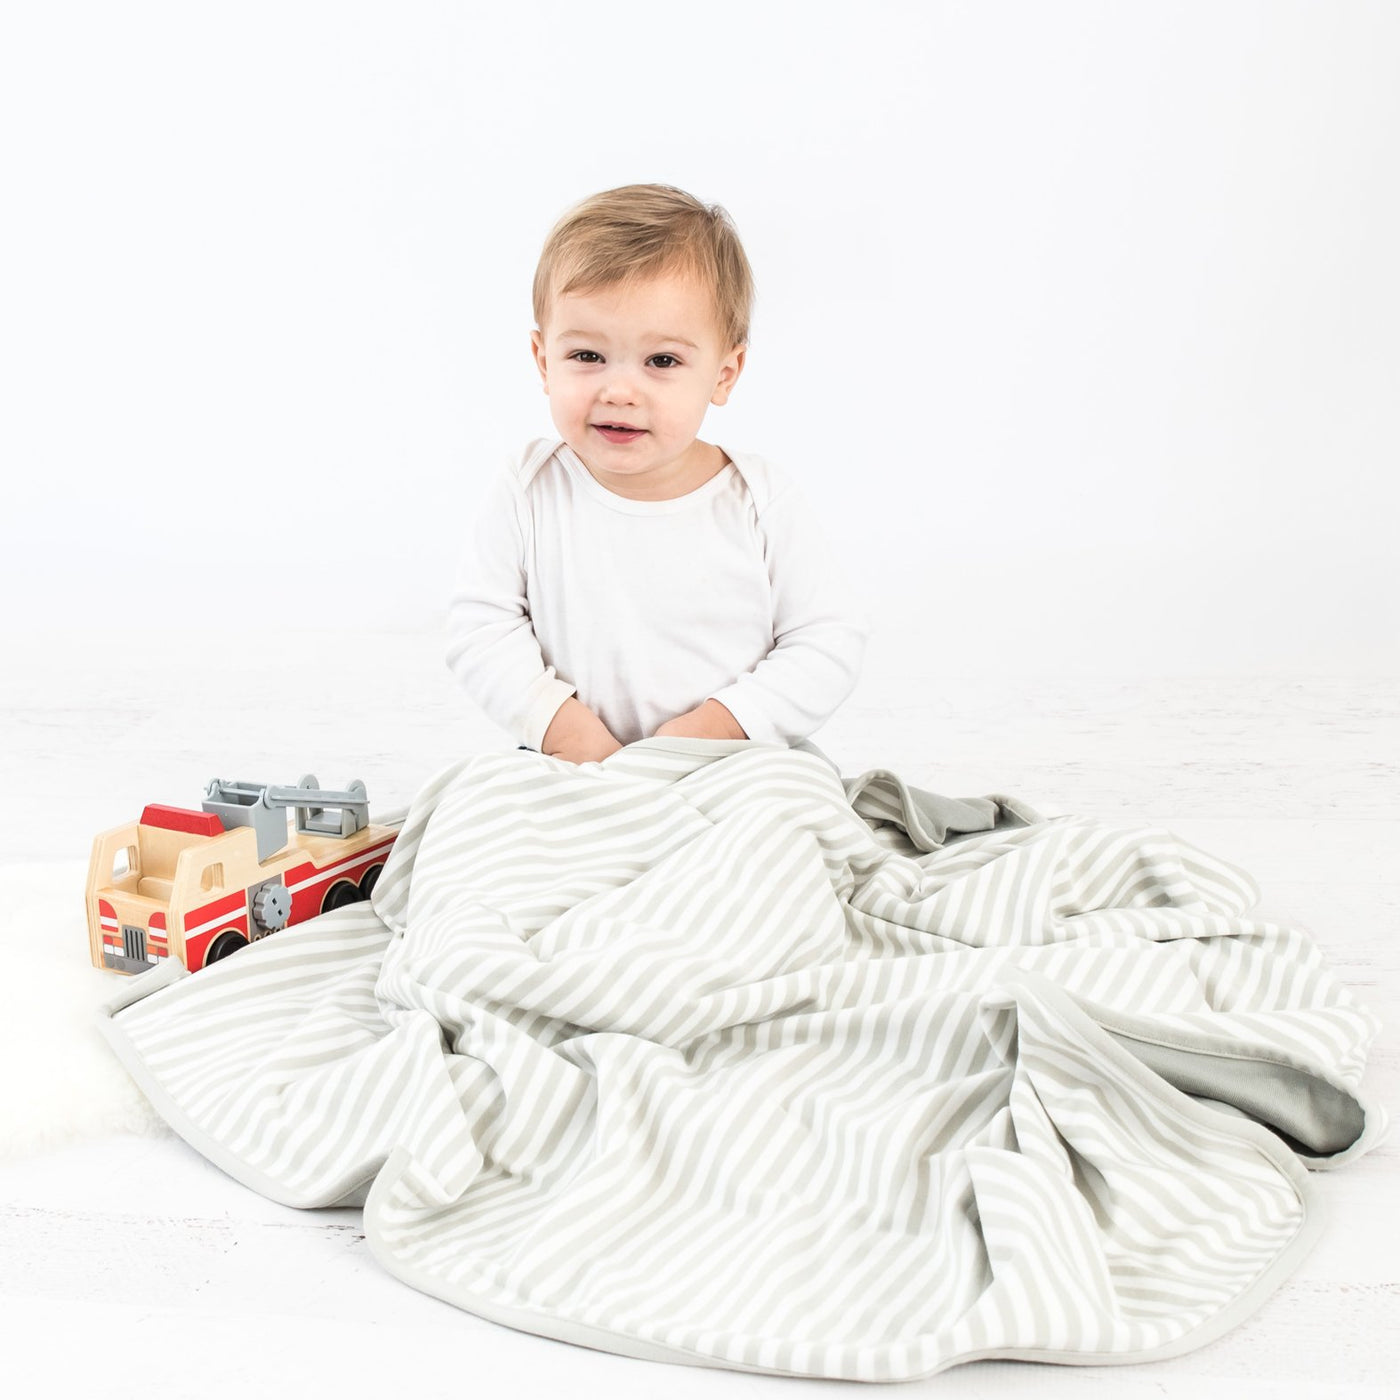 Imperfect BABY Blanket, 4 Season™ Stroller Merino Wool Blanket, 40" x 31.5", Stripes Gray